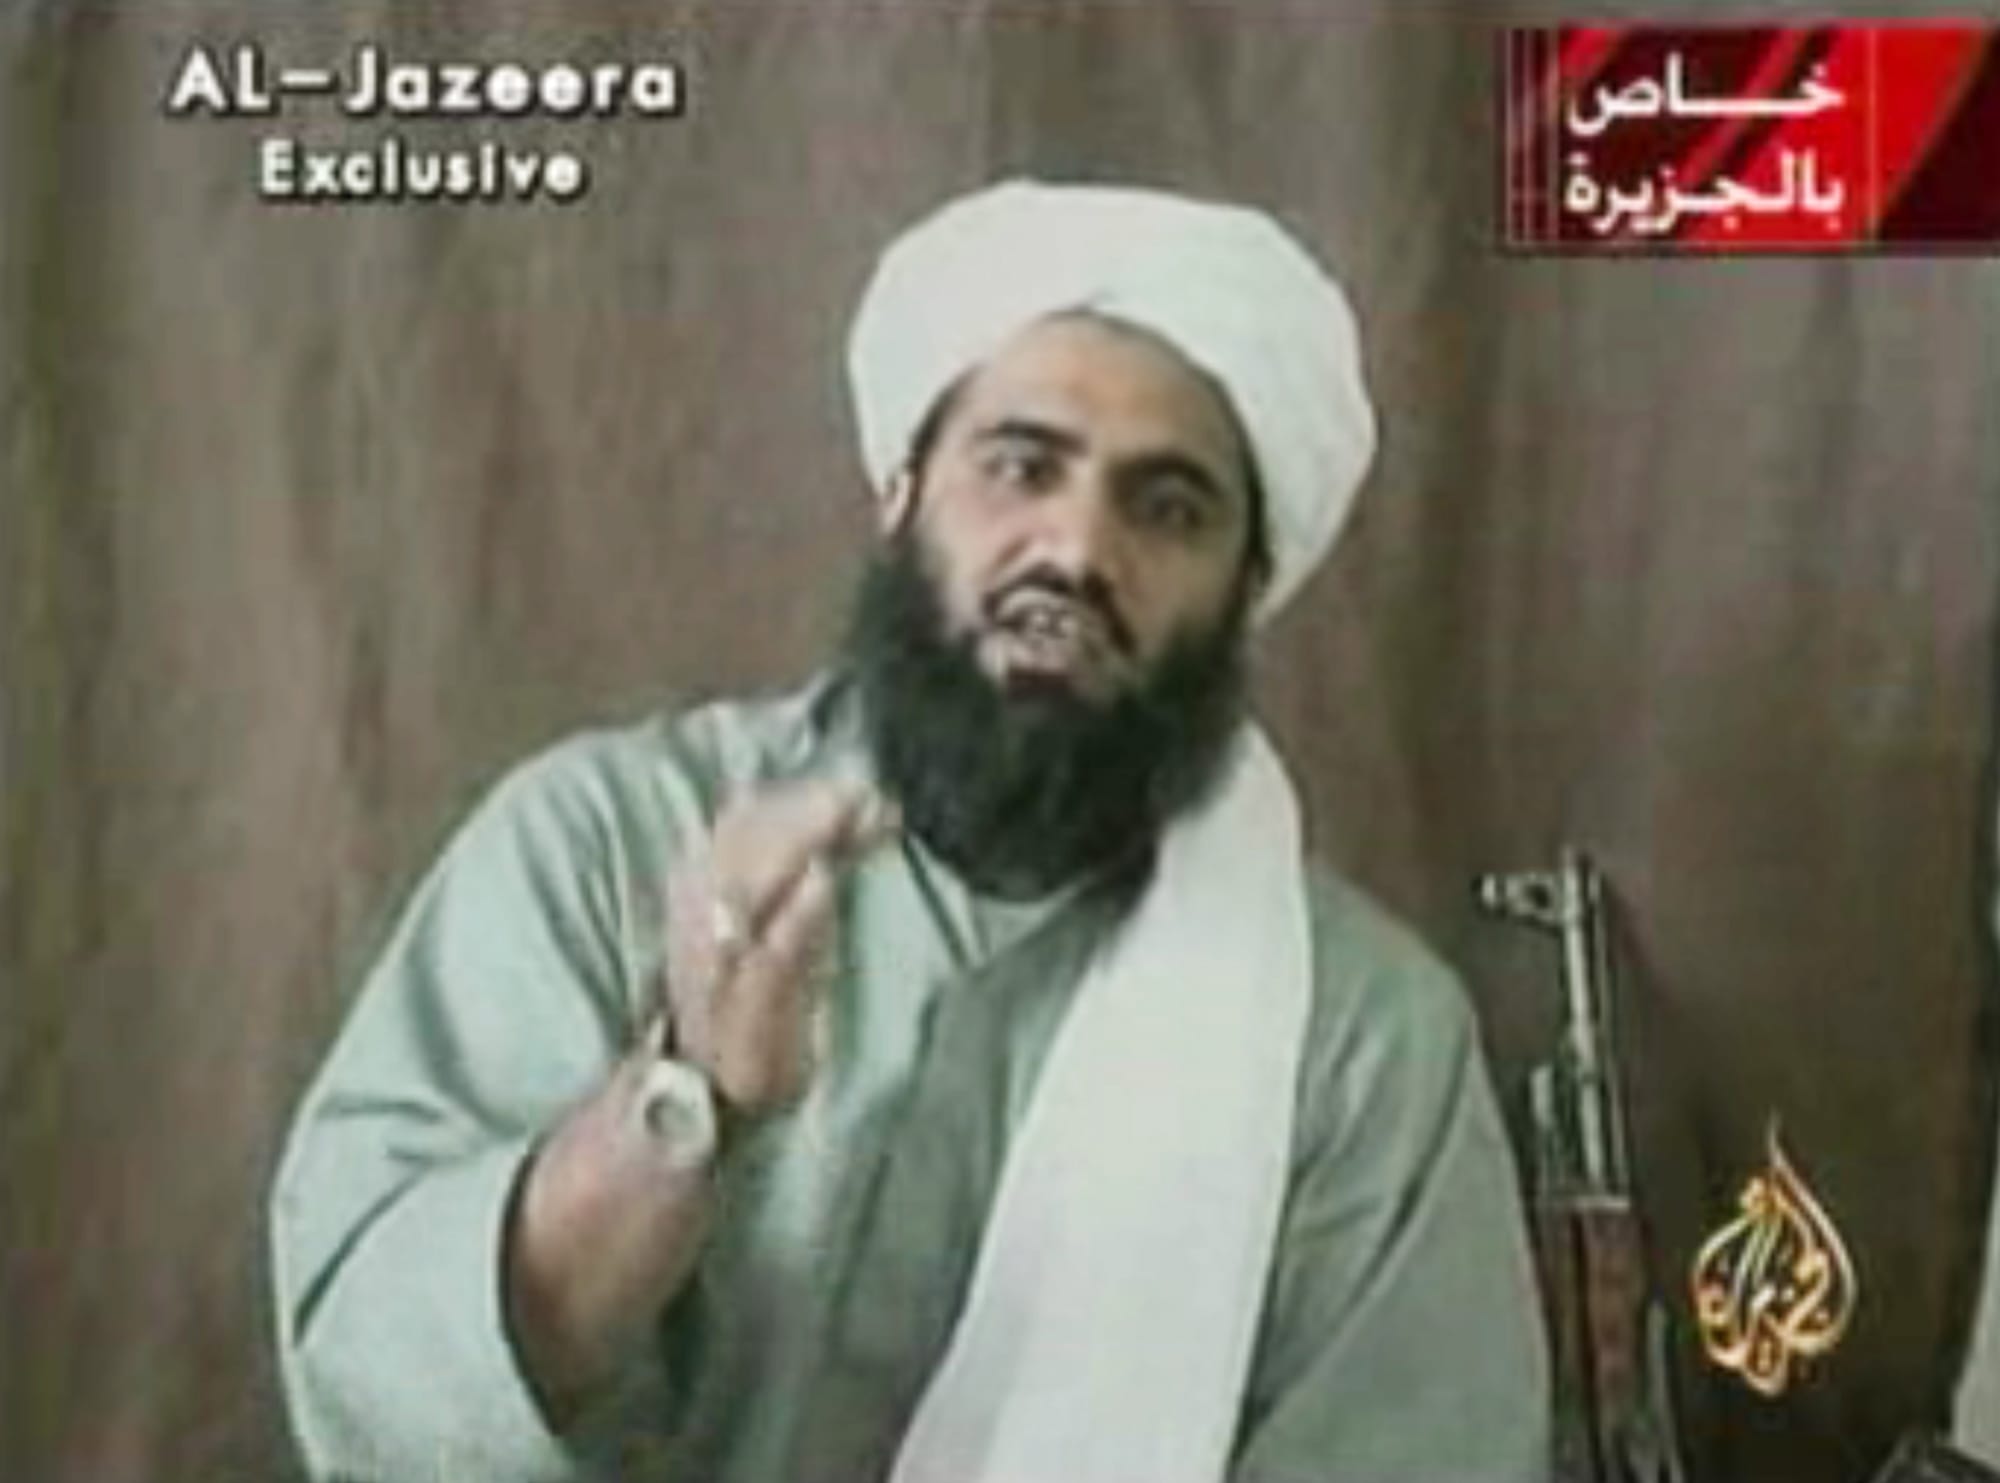 Sulaiman Abu Ghaith, Osama bin Laden's son-in-law and spokesman.